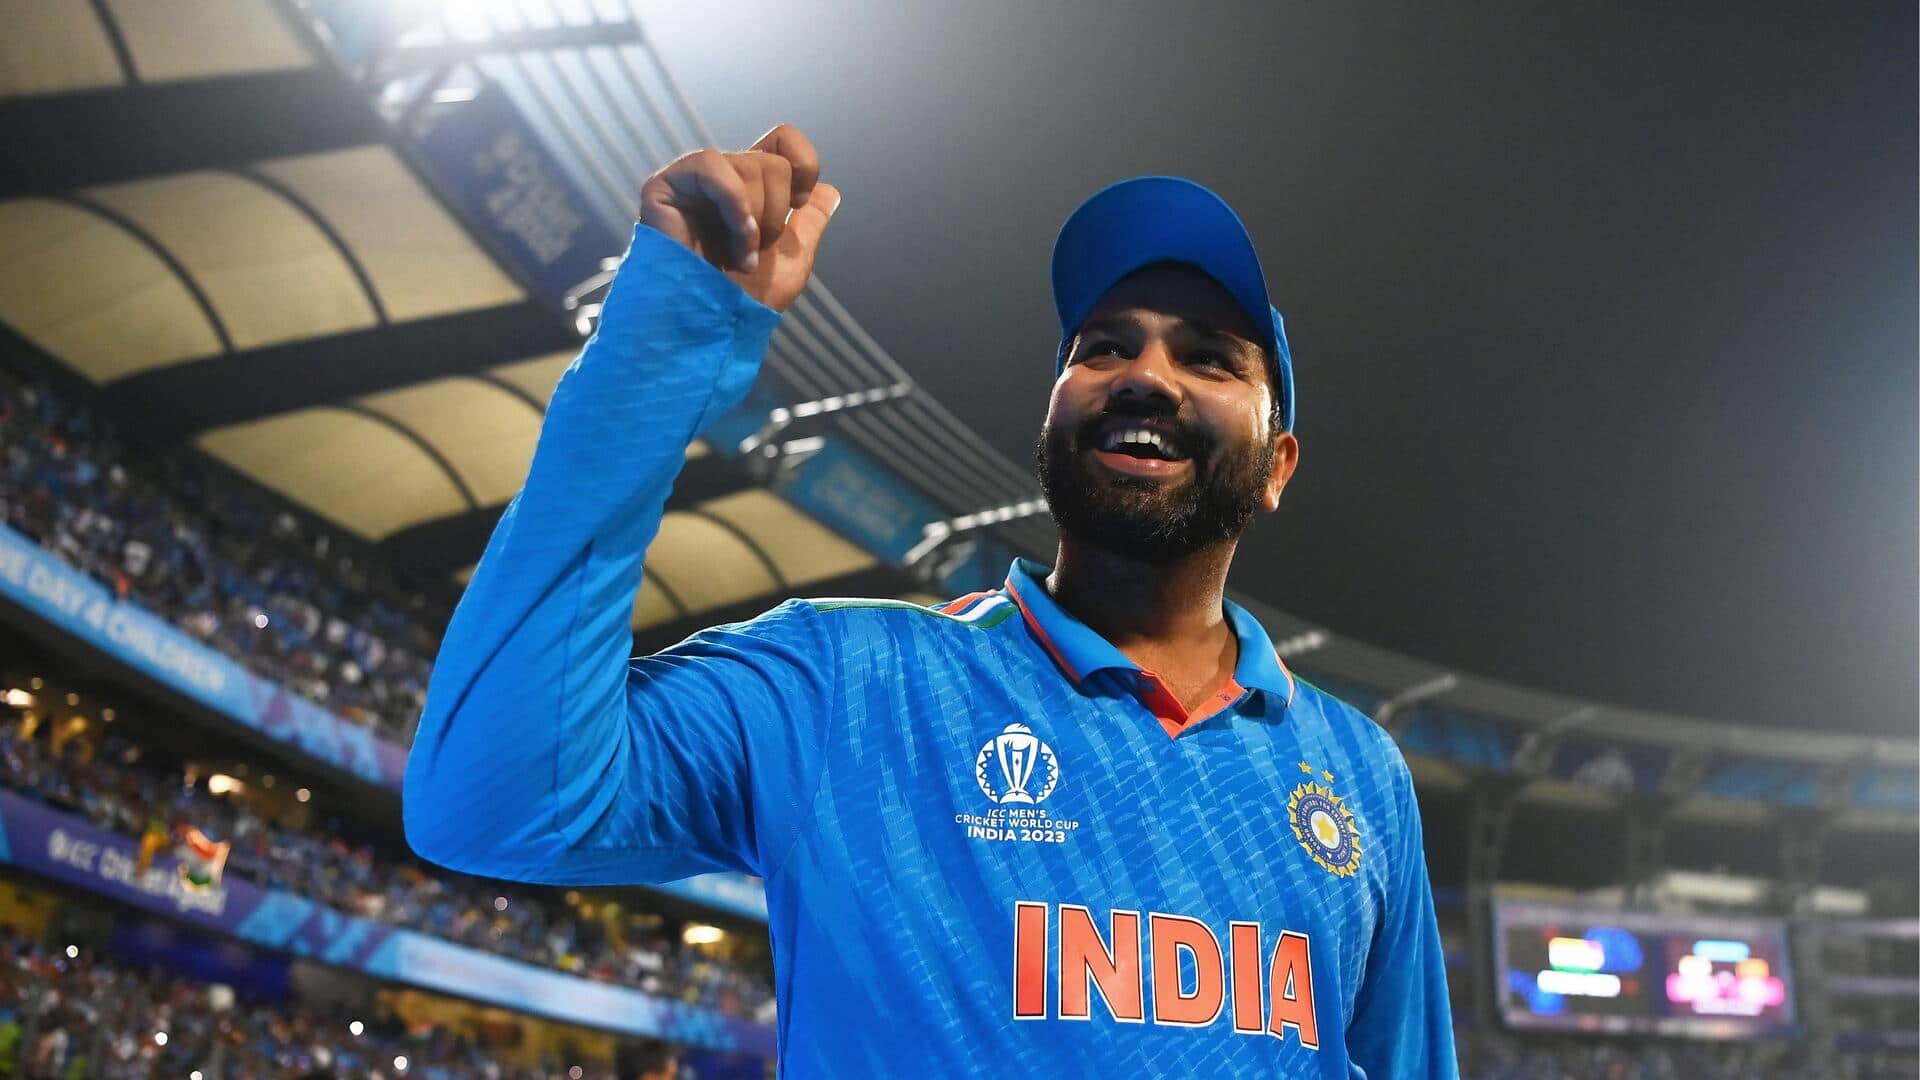 Rohit Sharma completes 2,000 ODI runs as Indian captain: Stats